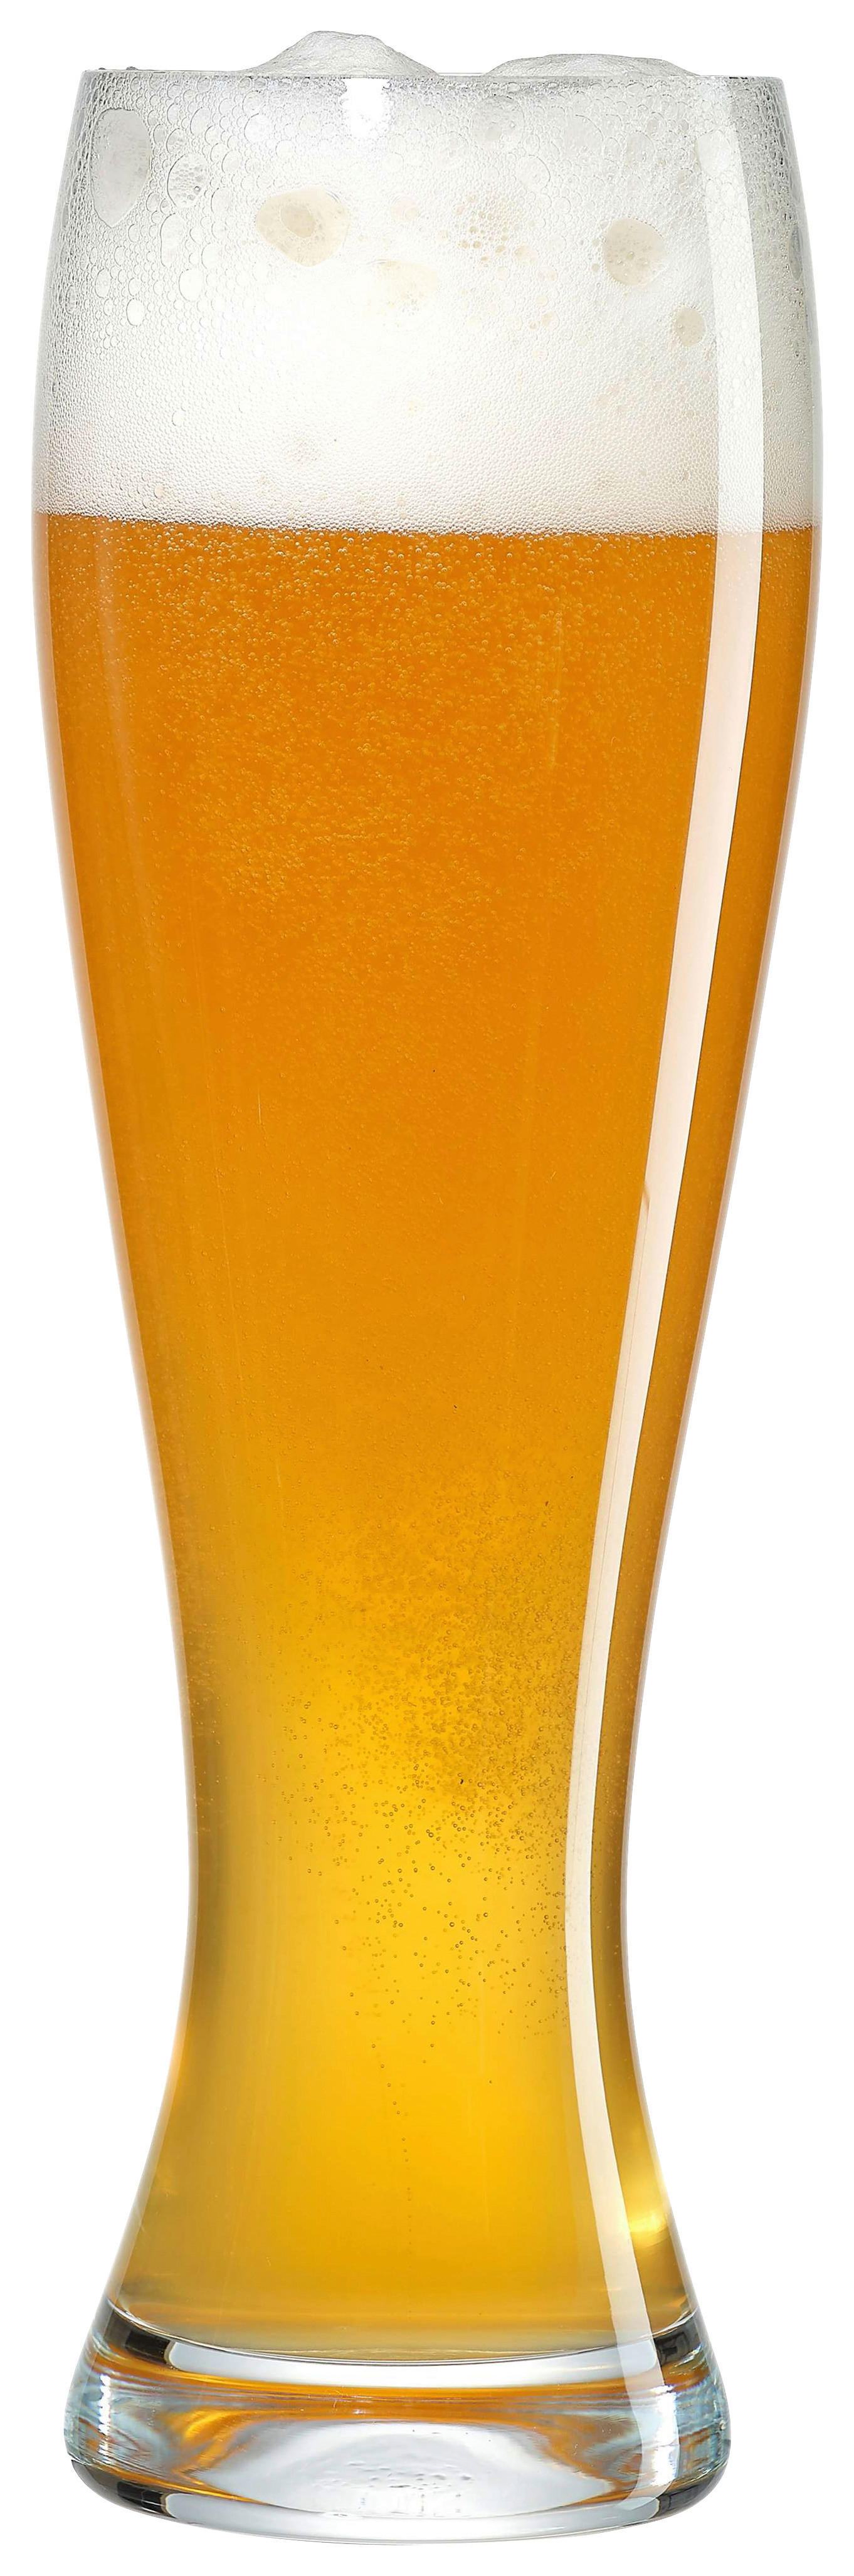 Weizenbierglas klar Weizenbierglas - klar (8,00/8,00/25,00cm)